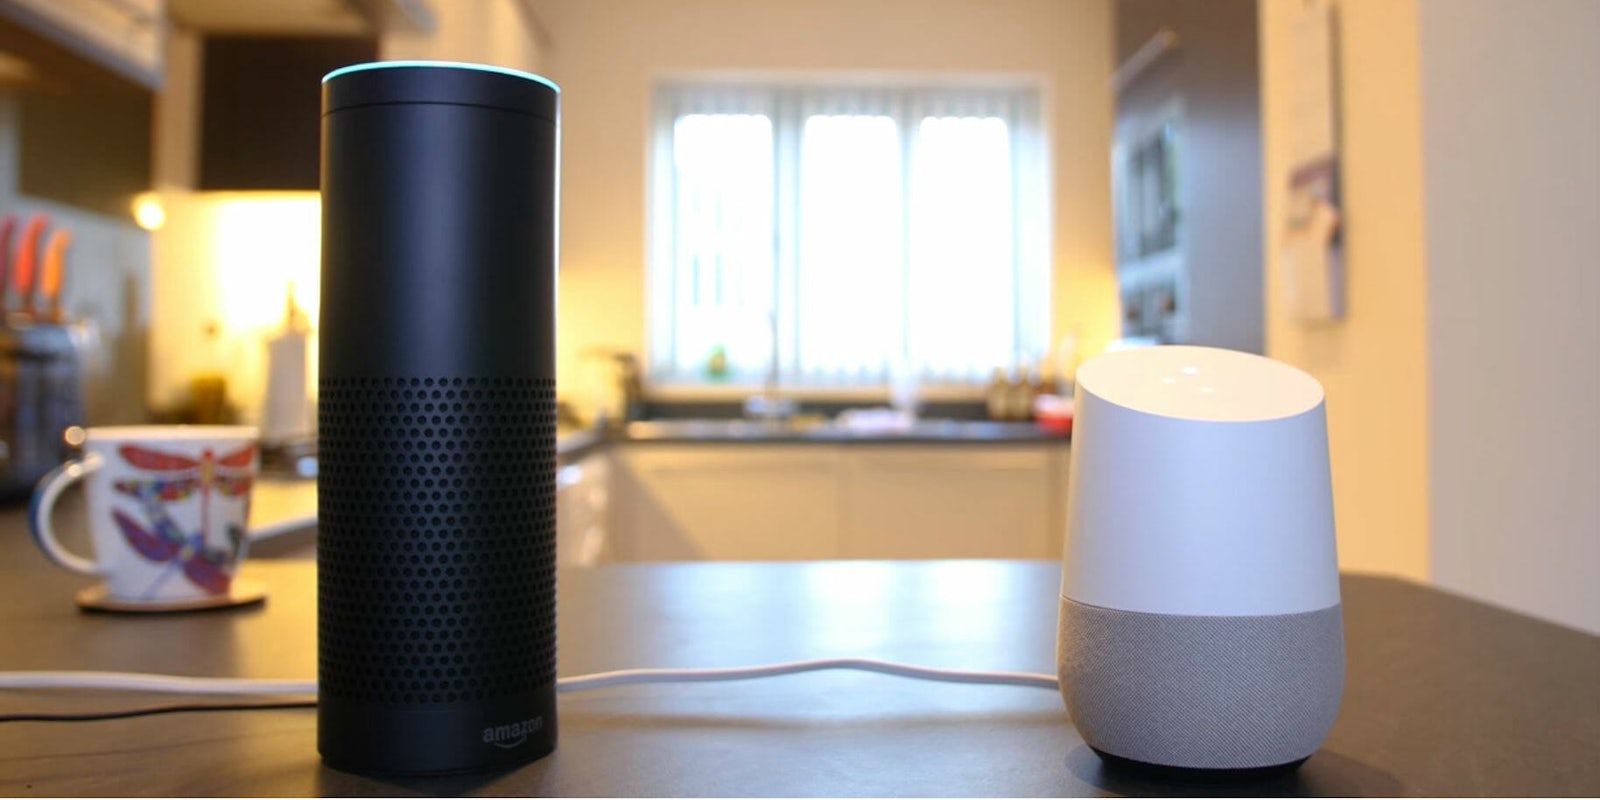 amazon echo alexa google home assistant smart speakers